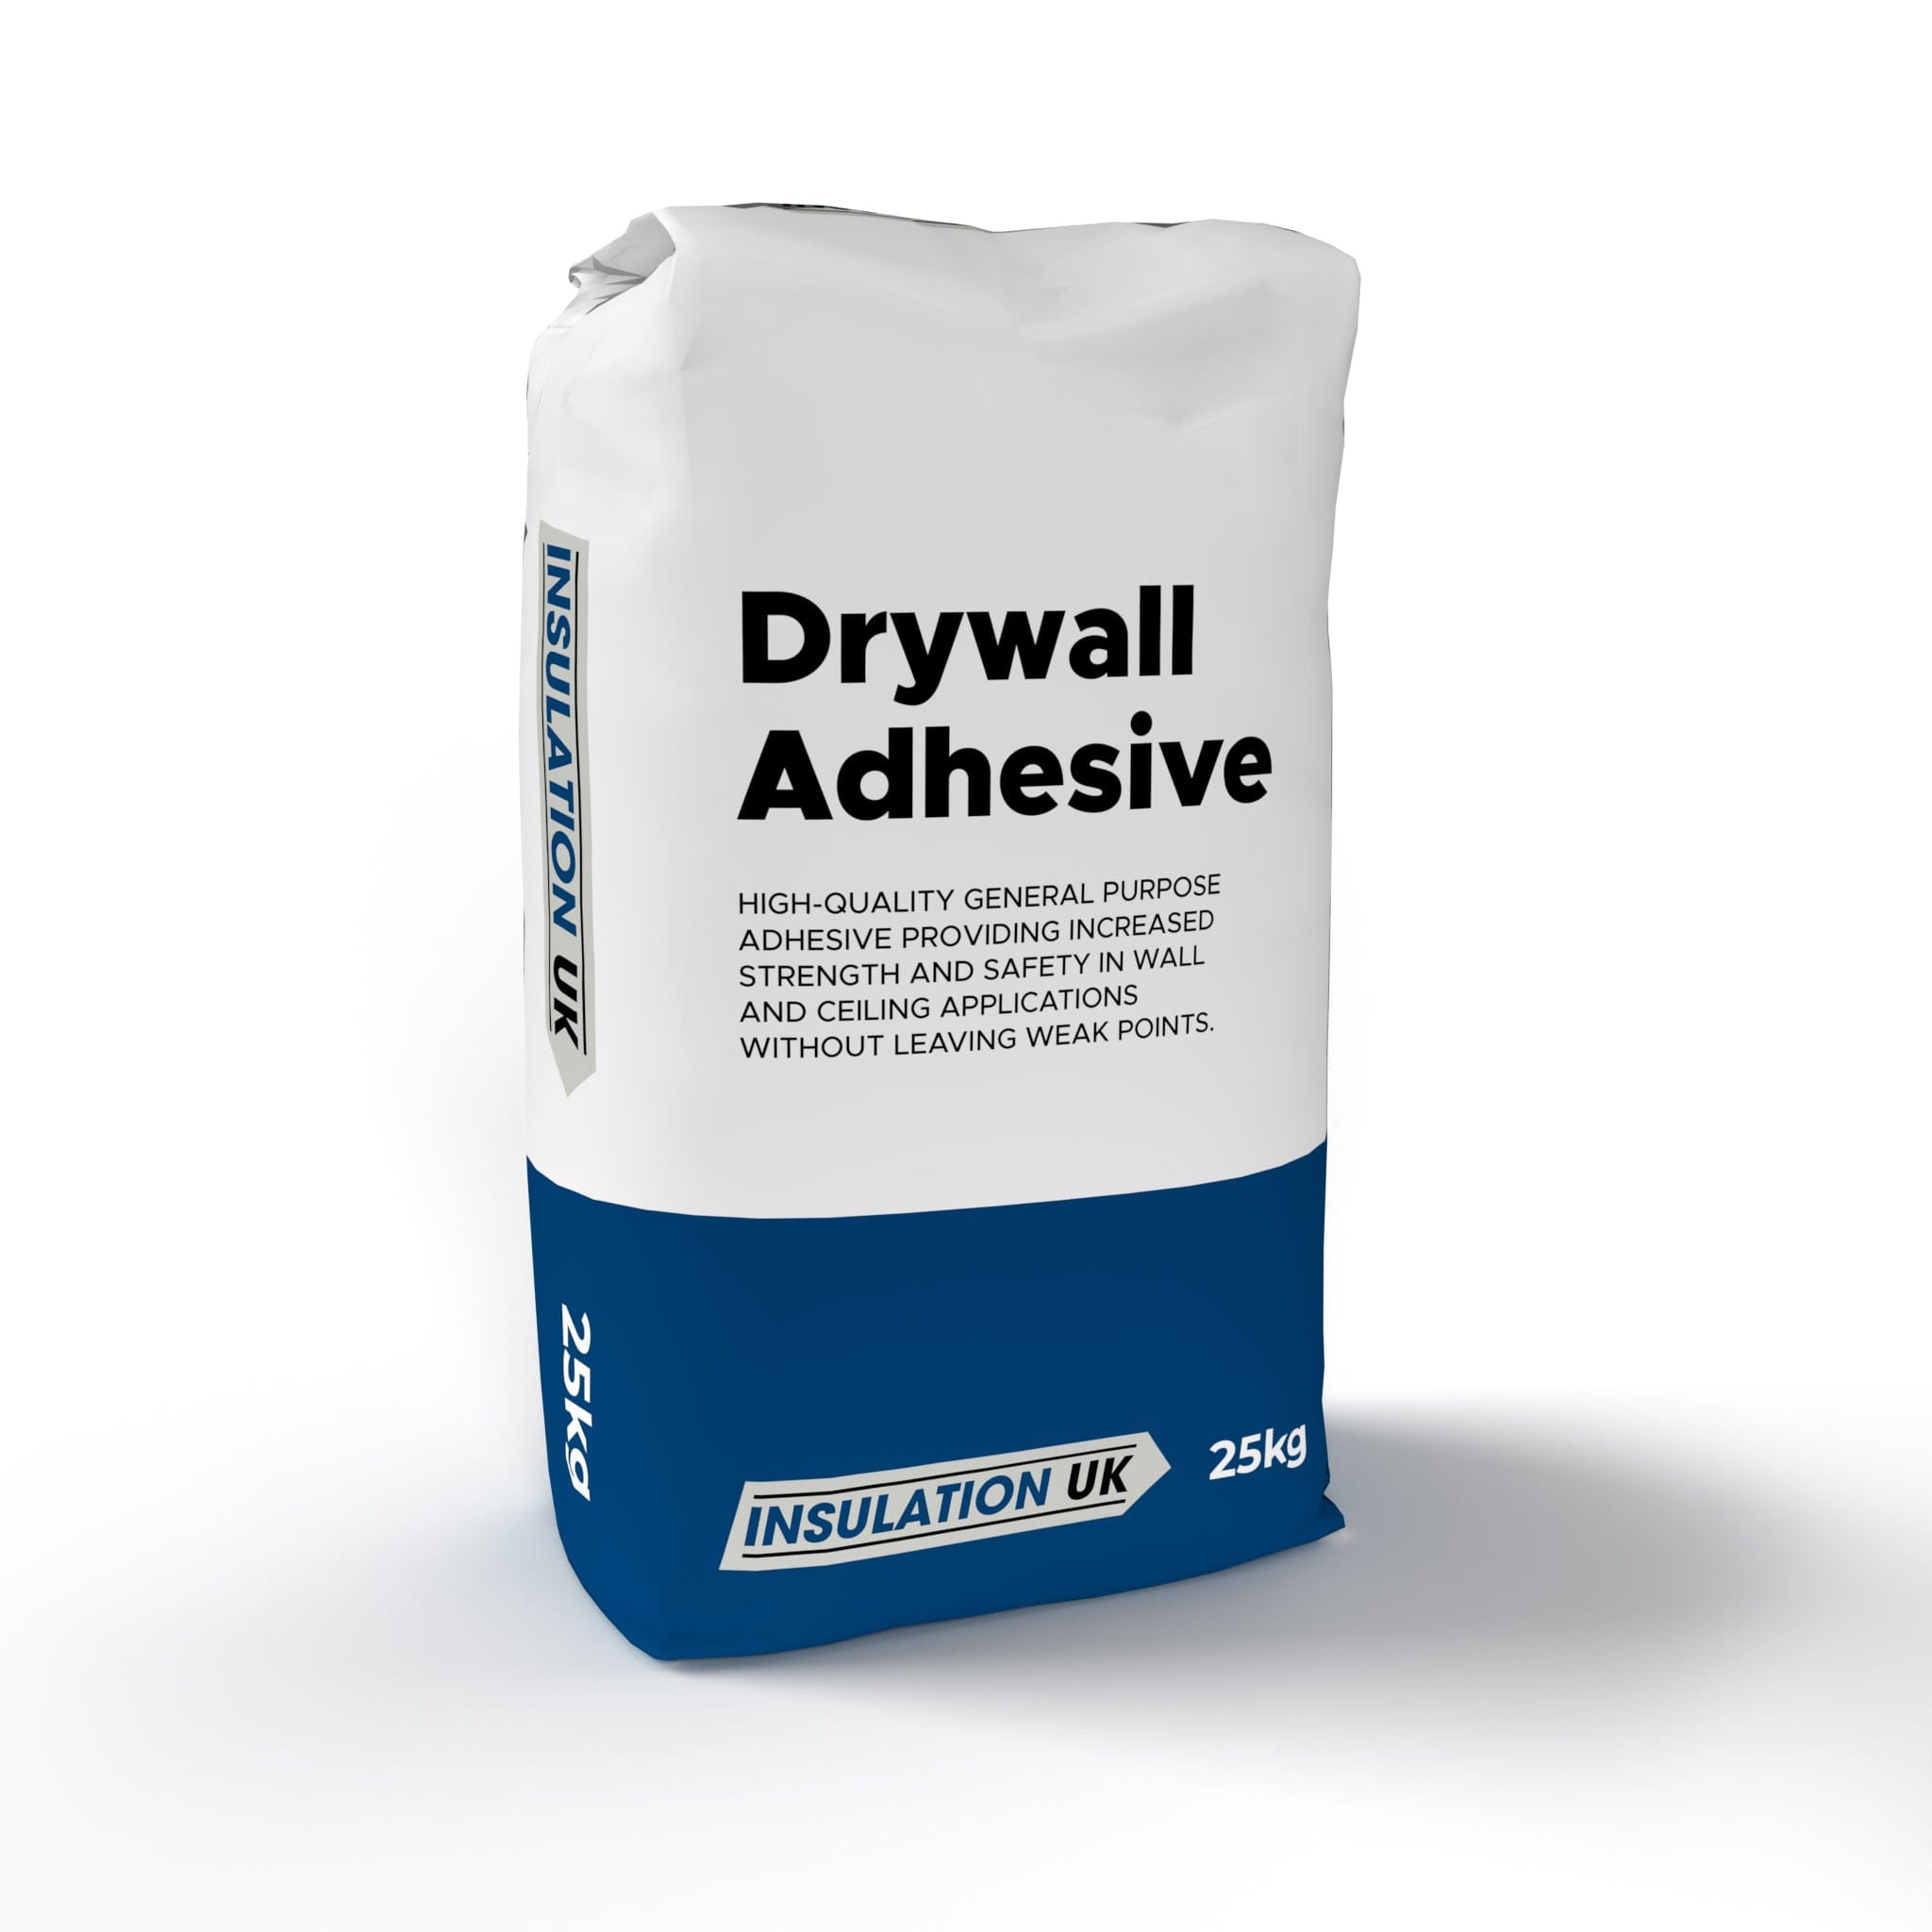 InsulationUK Building Consumables Drywall Adhesive | 25kg IUK01031 Drywall Adhesive 25kg 